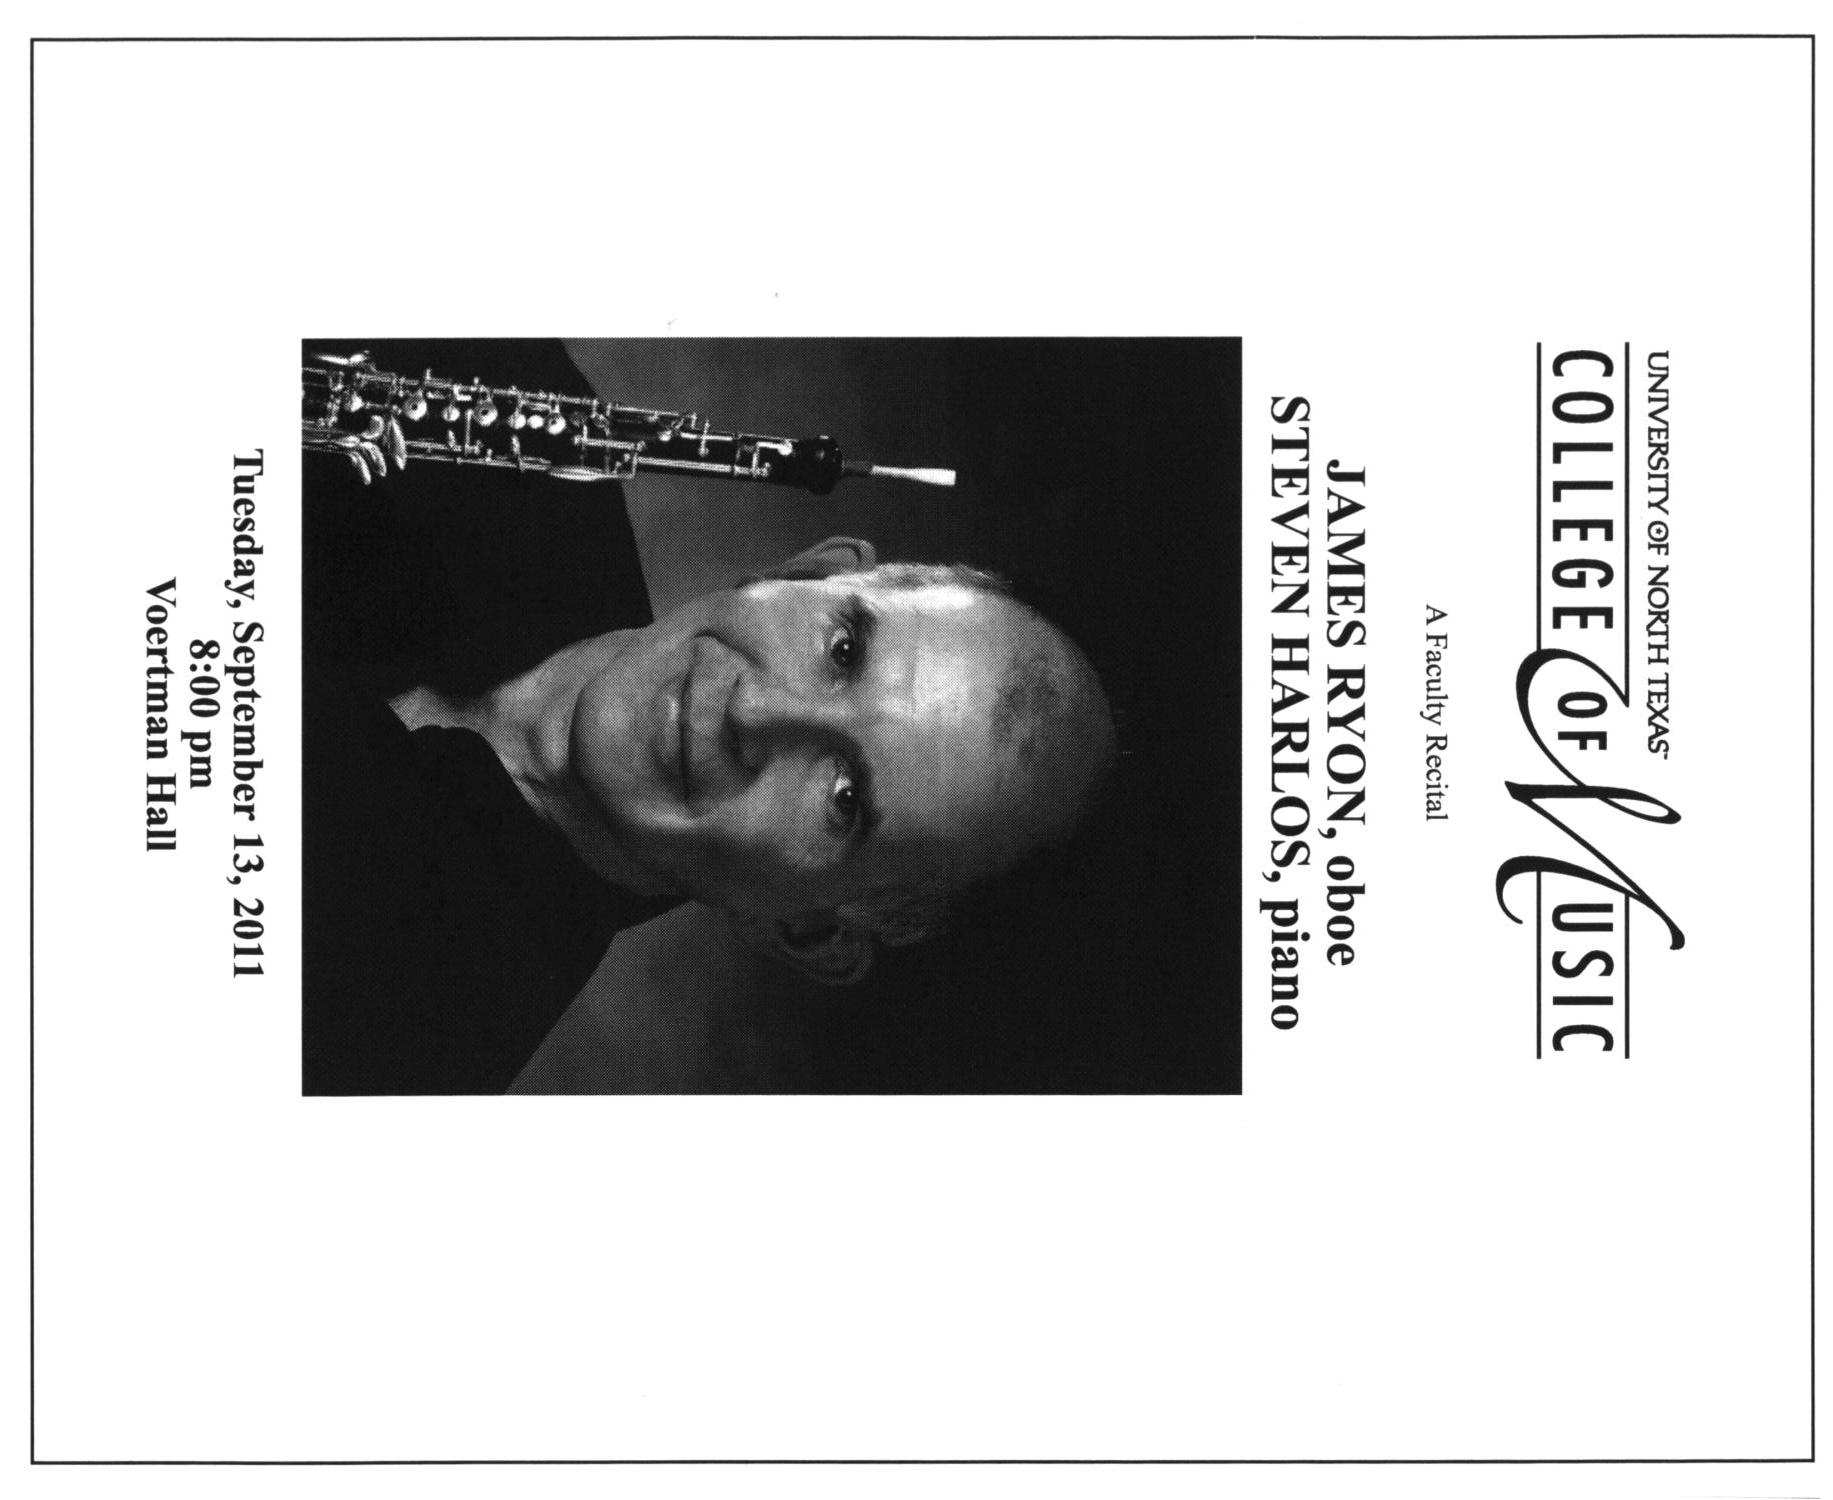 College of Music Program Book 2011-2012: Ensemble & Other Performances, Volume 1
                                                
                                                    39
                                                